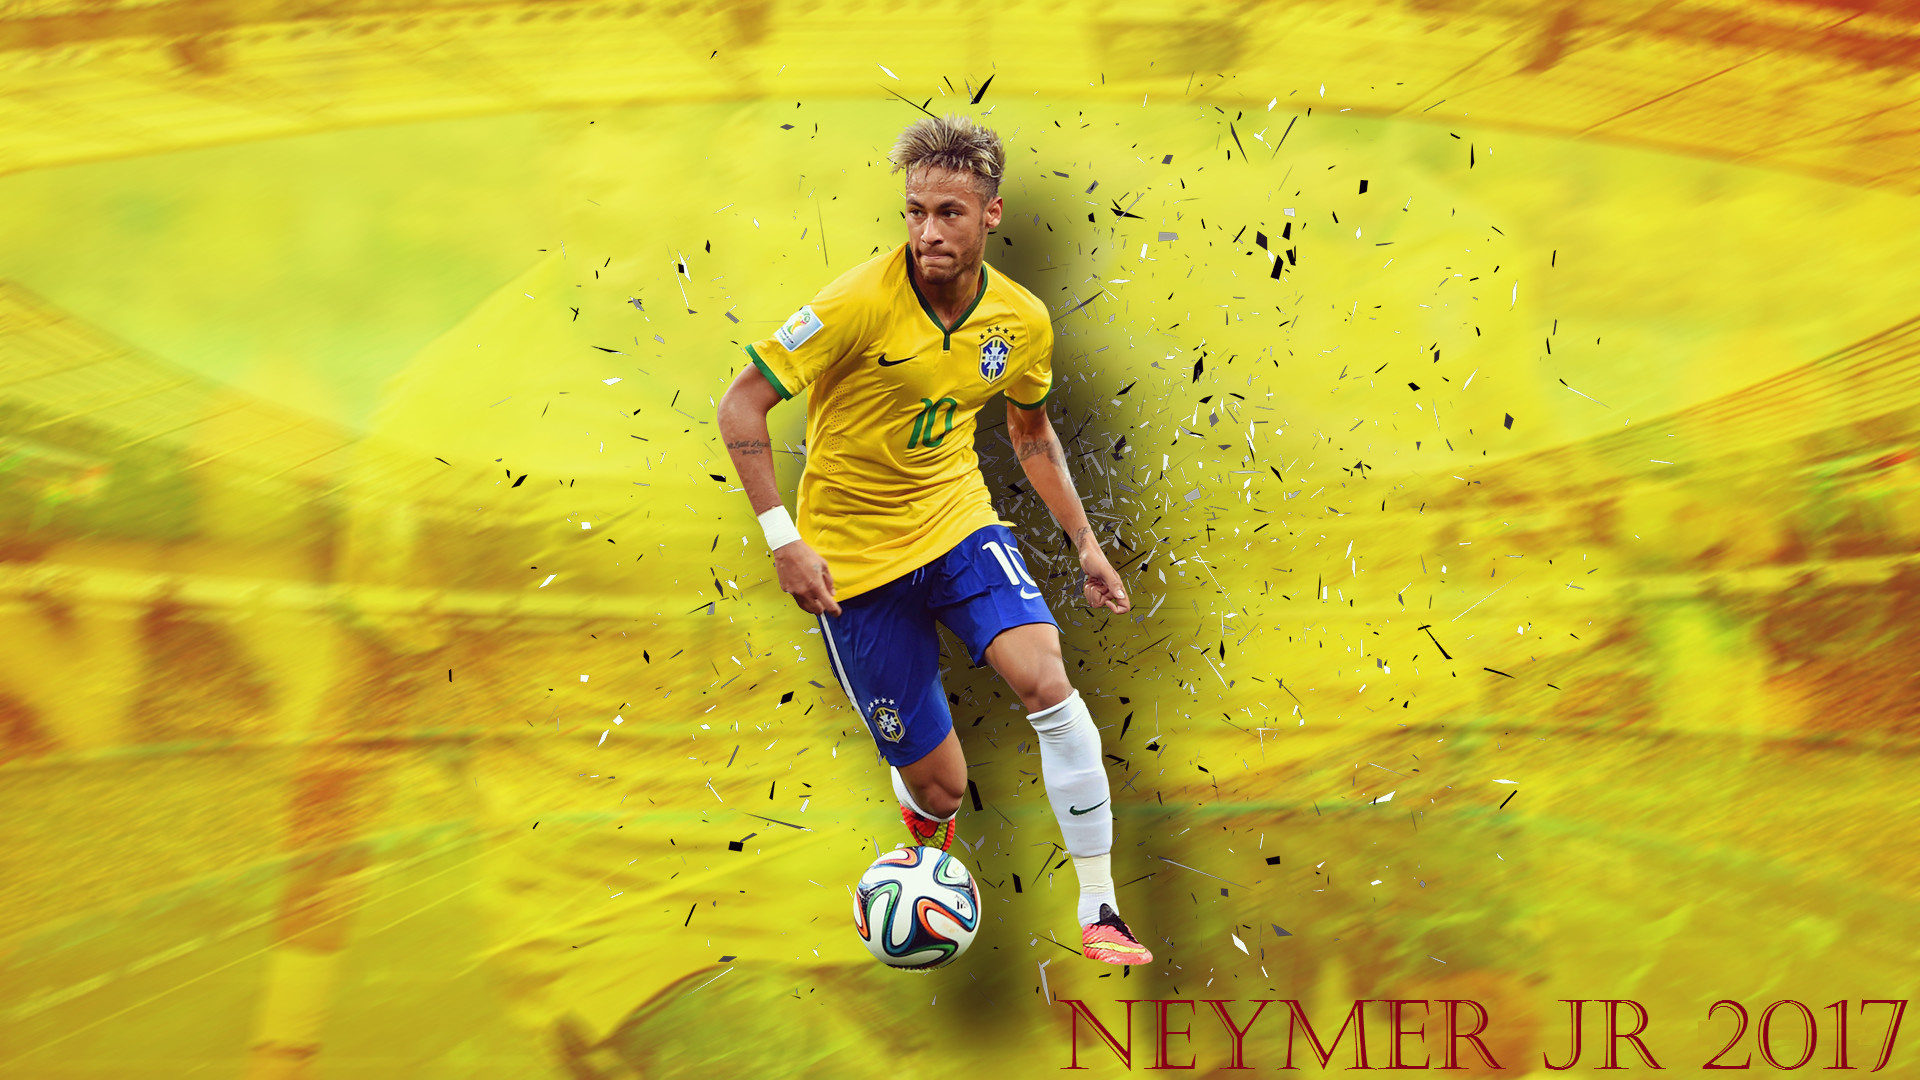 1920x1080 cute neymar football soccer player hd free play with ball mobile bakground desktop  pics